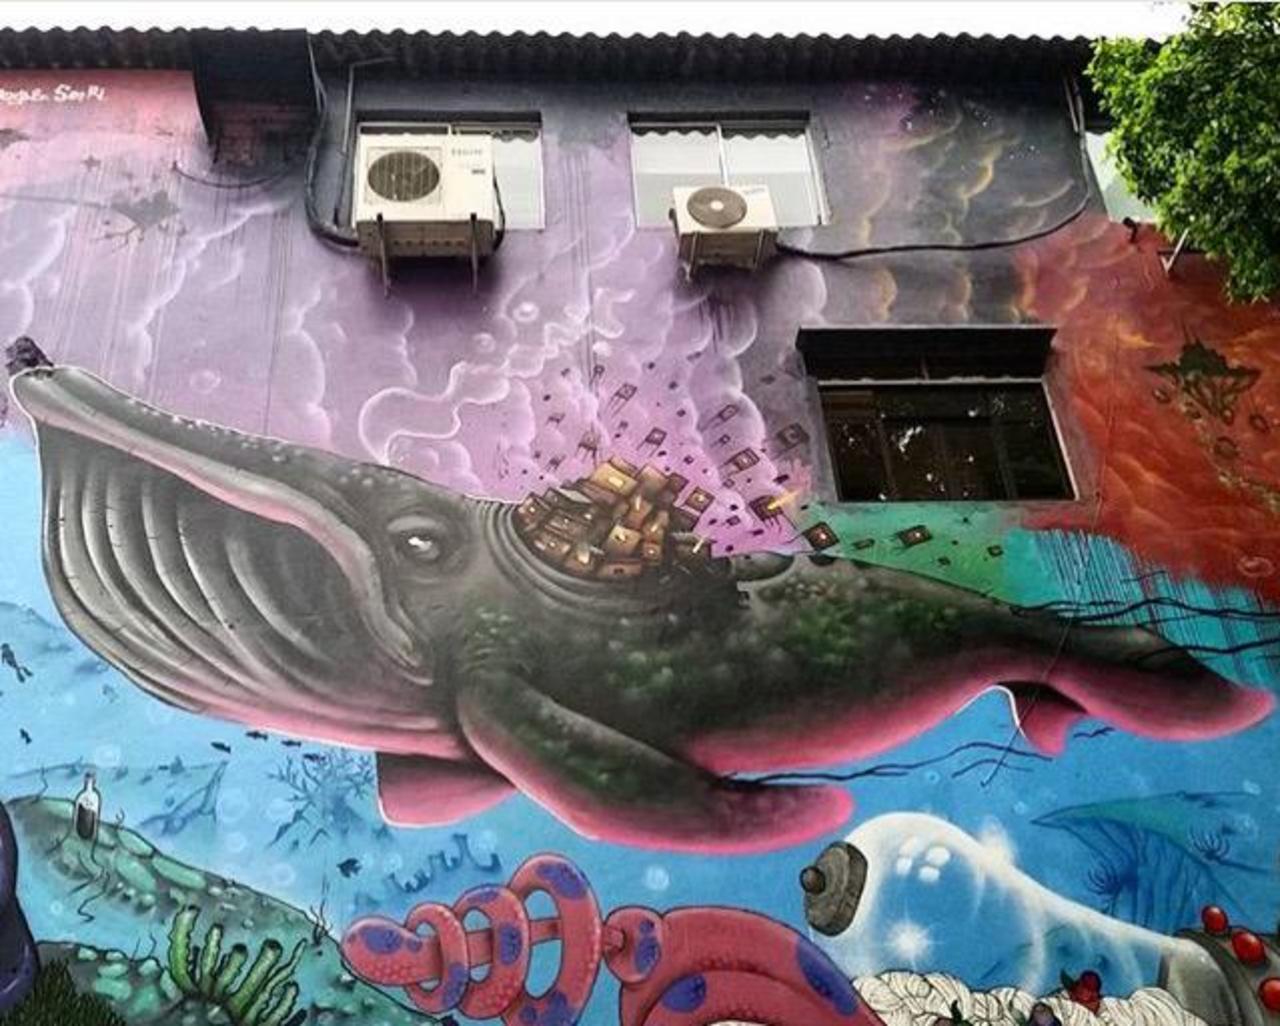 RT @GoogleStreetArt: Street Art by joks_johnes Pinheiros, São Paulo 

#art #mural #graffiti #streetart http://t.co/anFl52PAVE